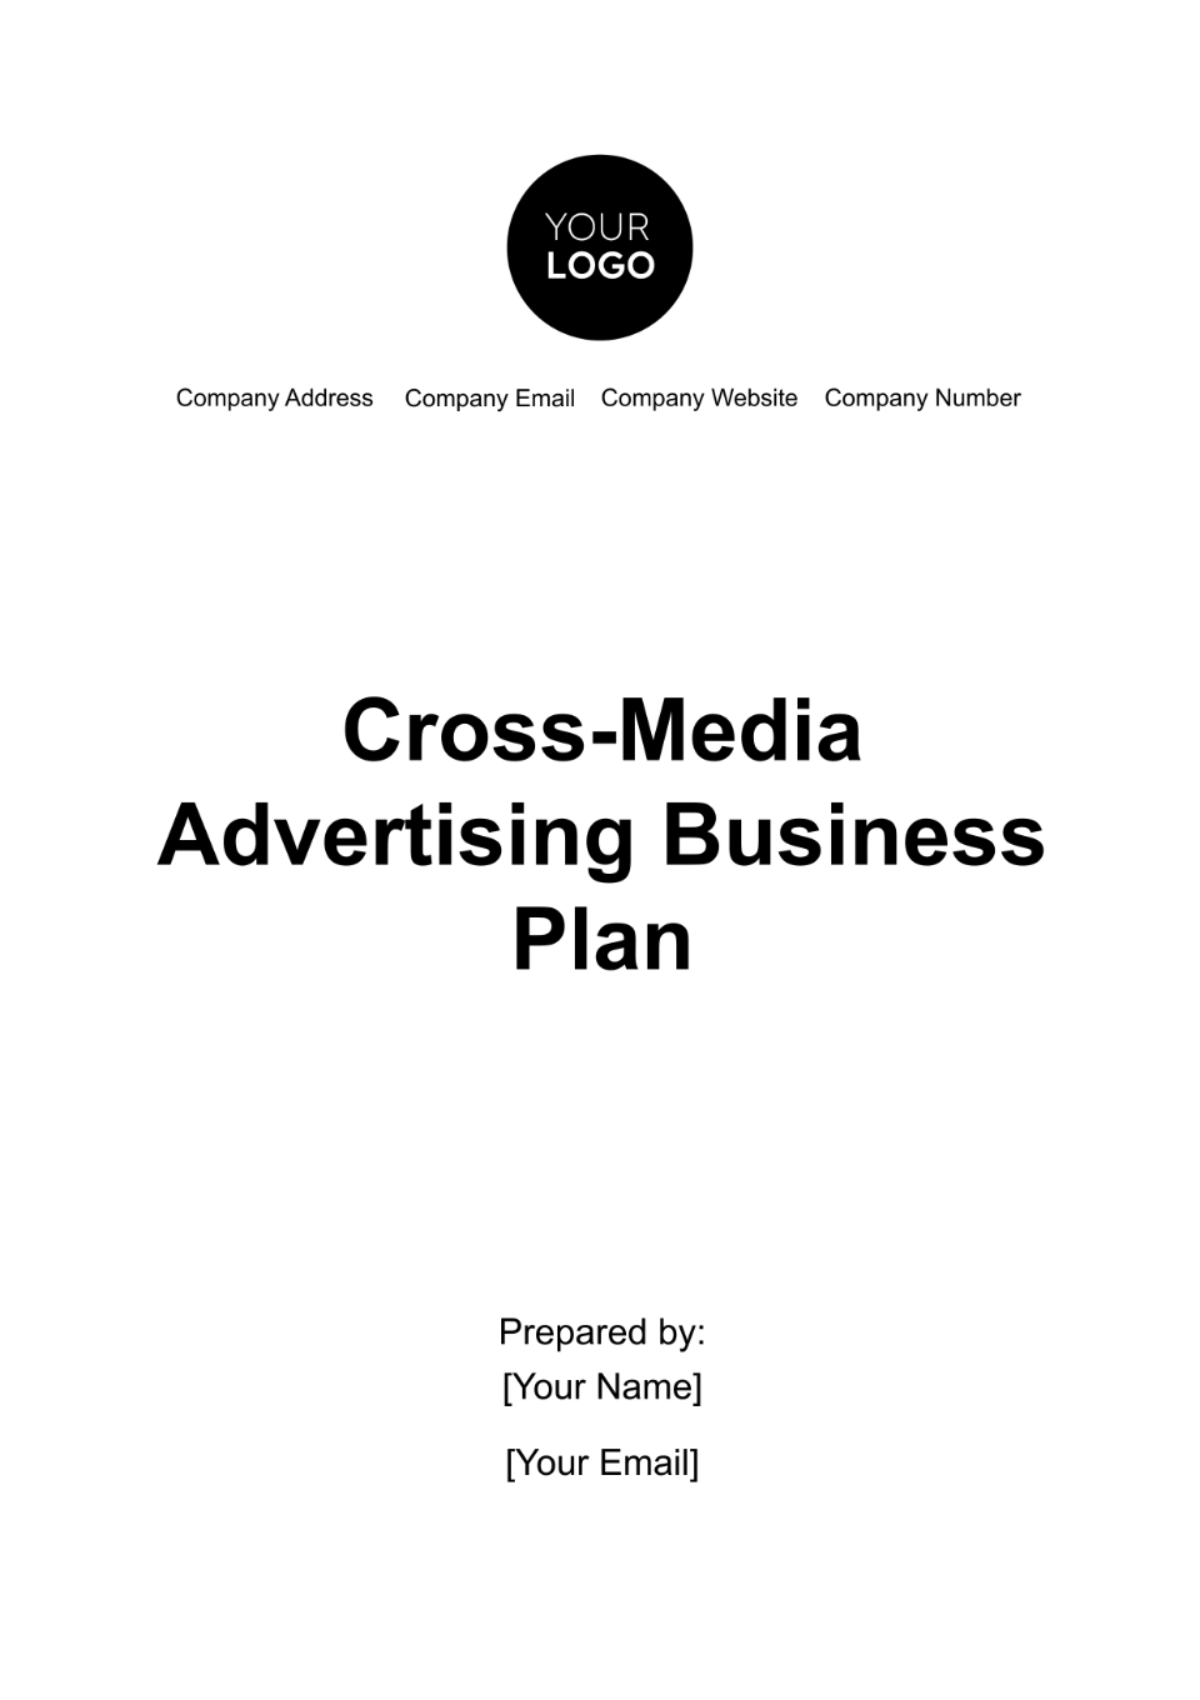 Cross-Media Advertising Business Plan Template